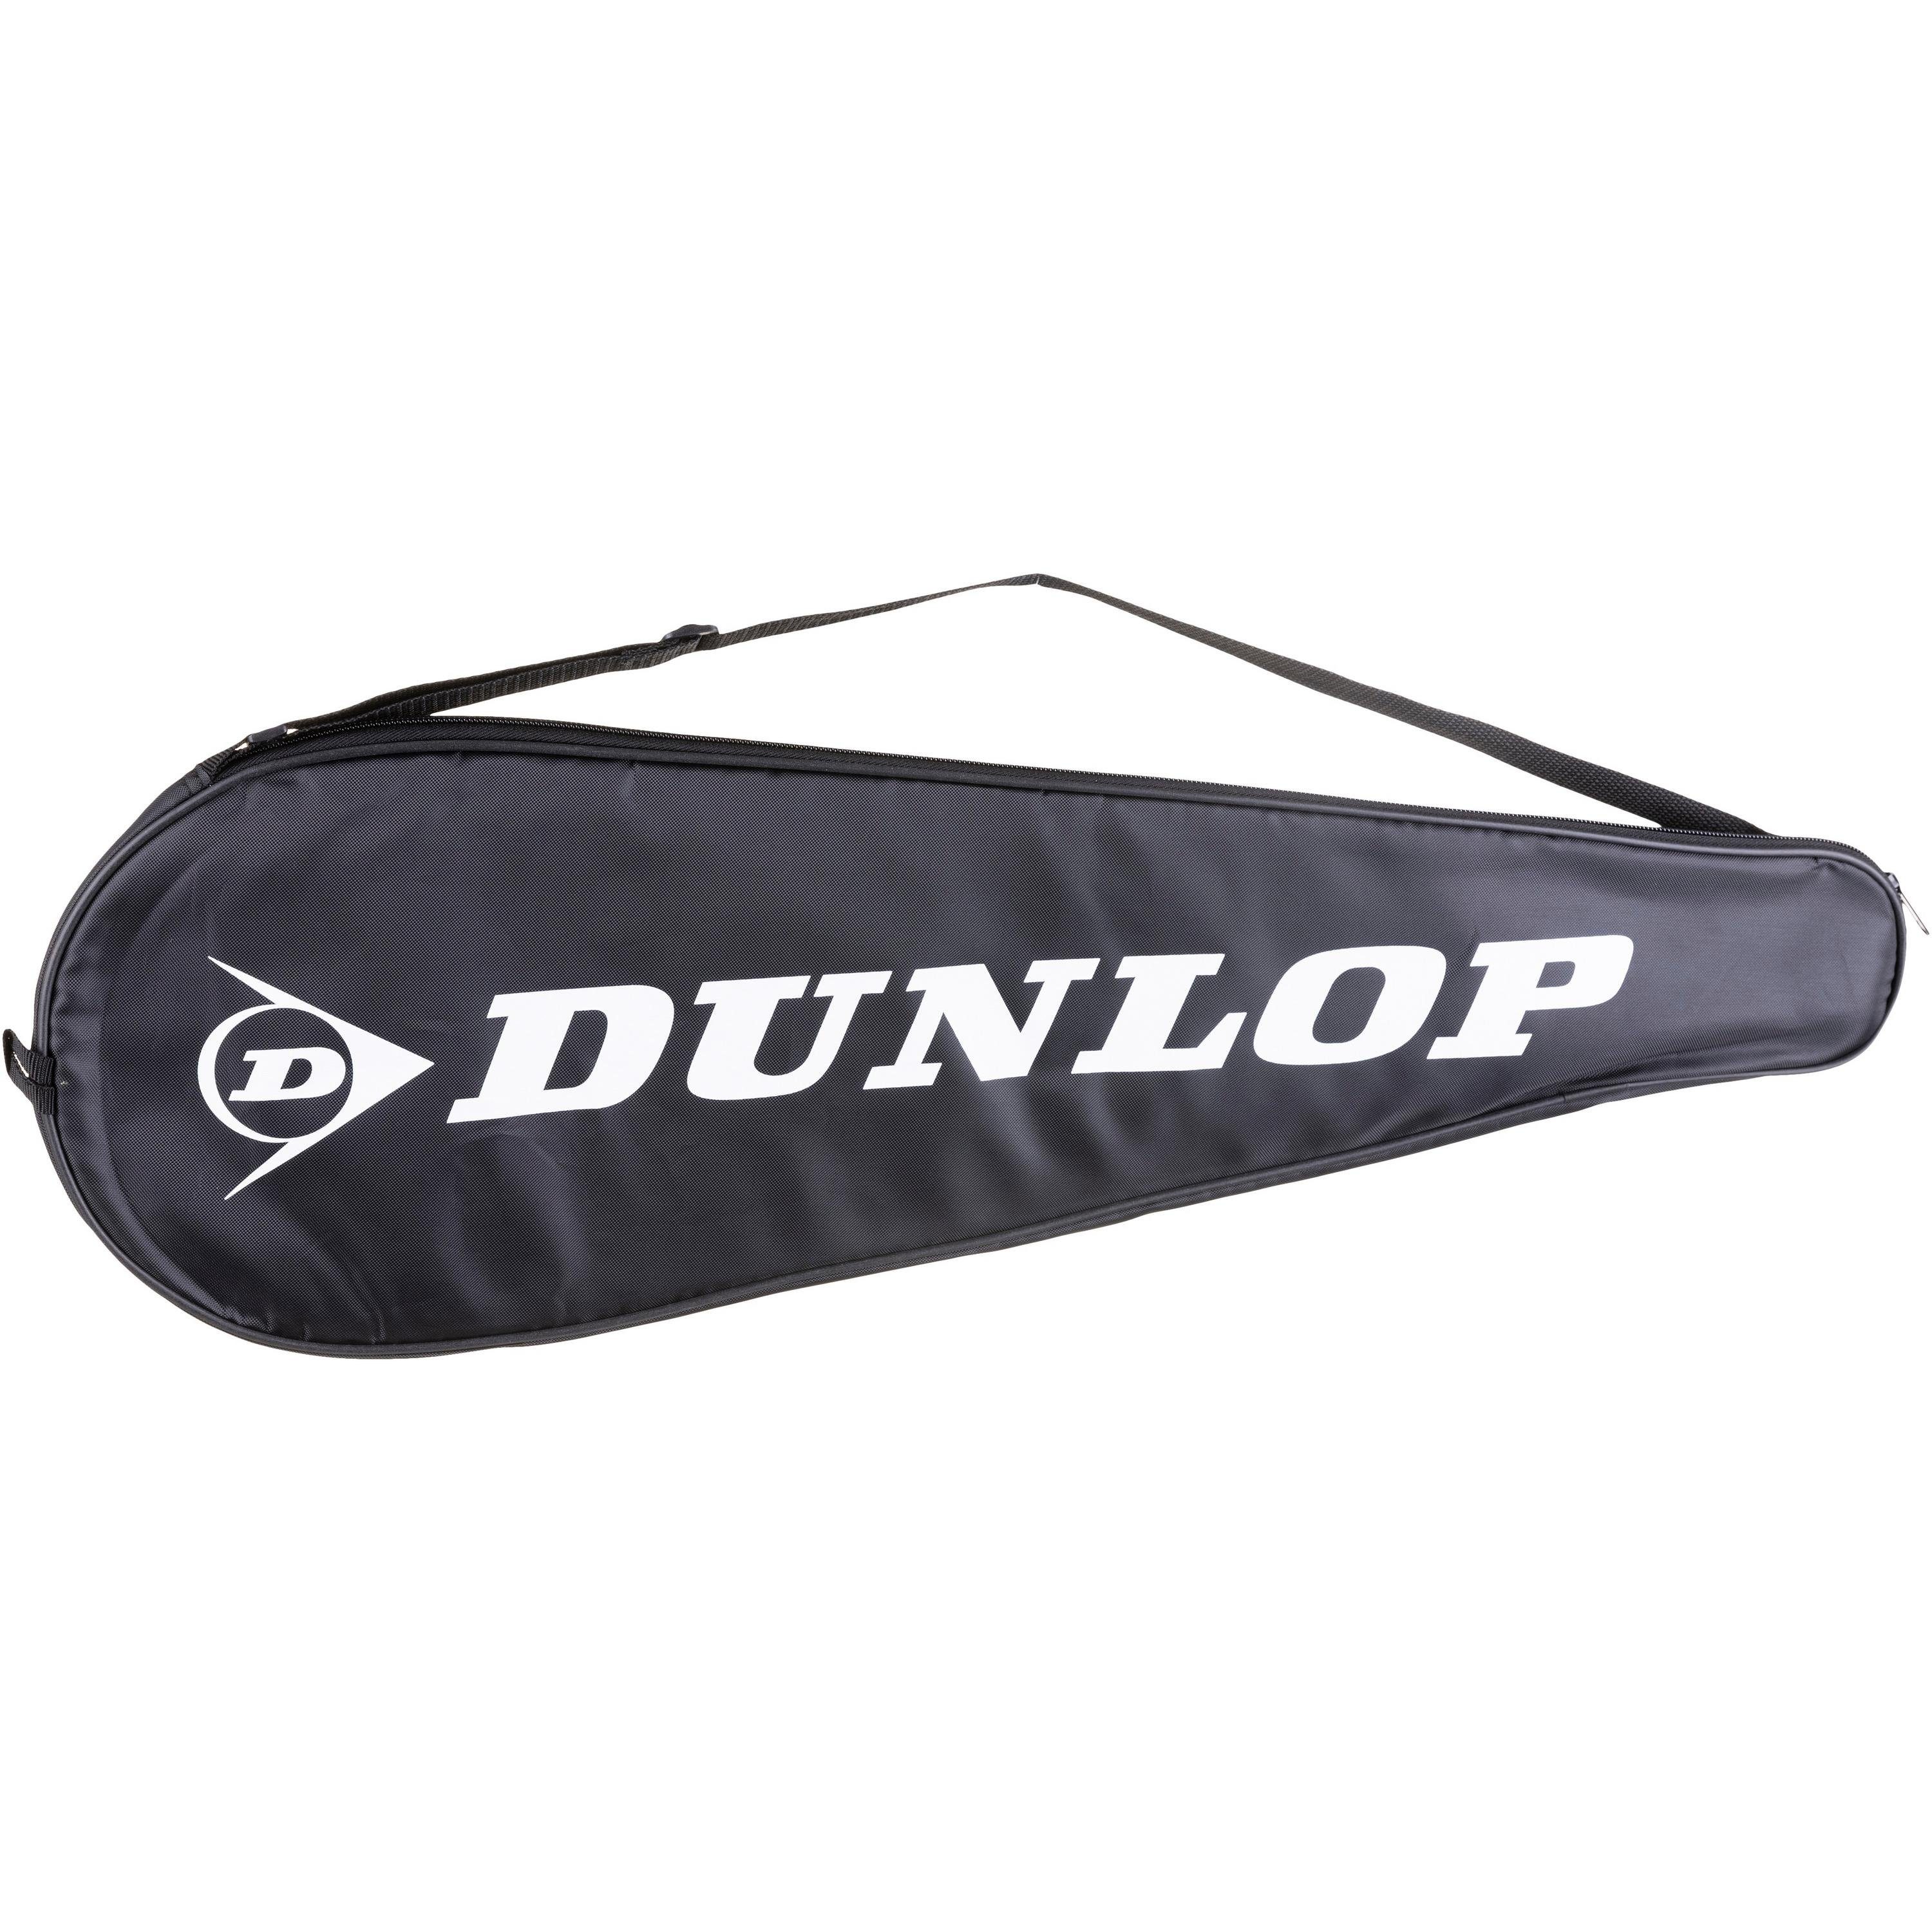 Dunlop Badmintonschläger REVO-STAR DRIVE BLACK/SILVER 83